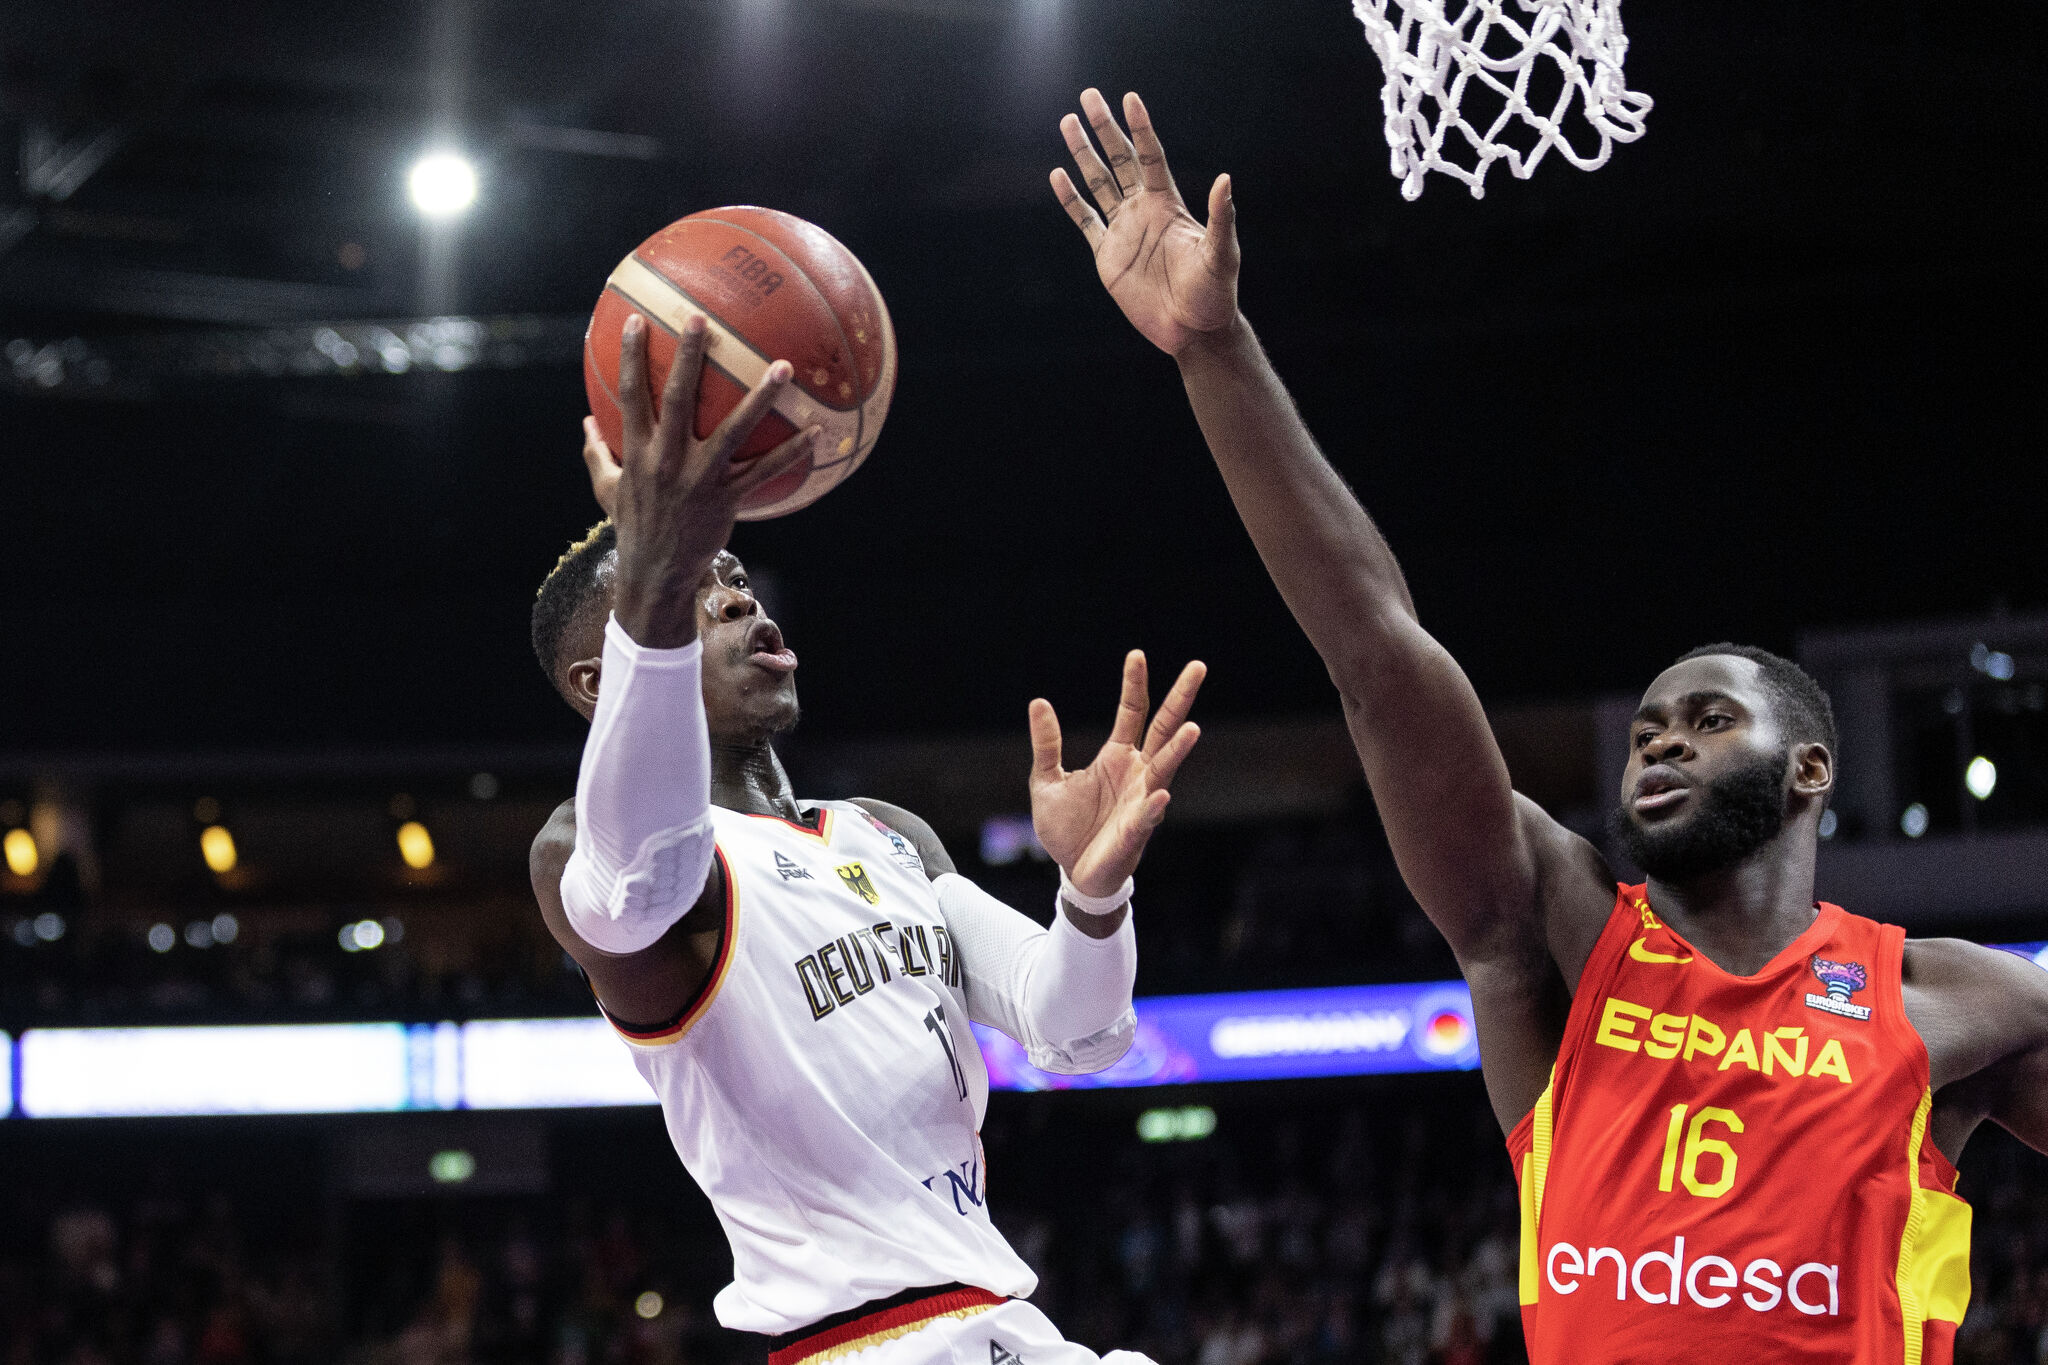 Osman Garuba mostró potencial en el Eurobasket